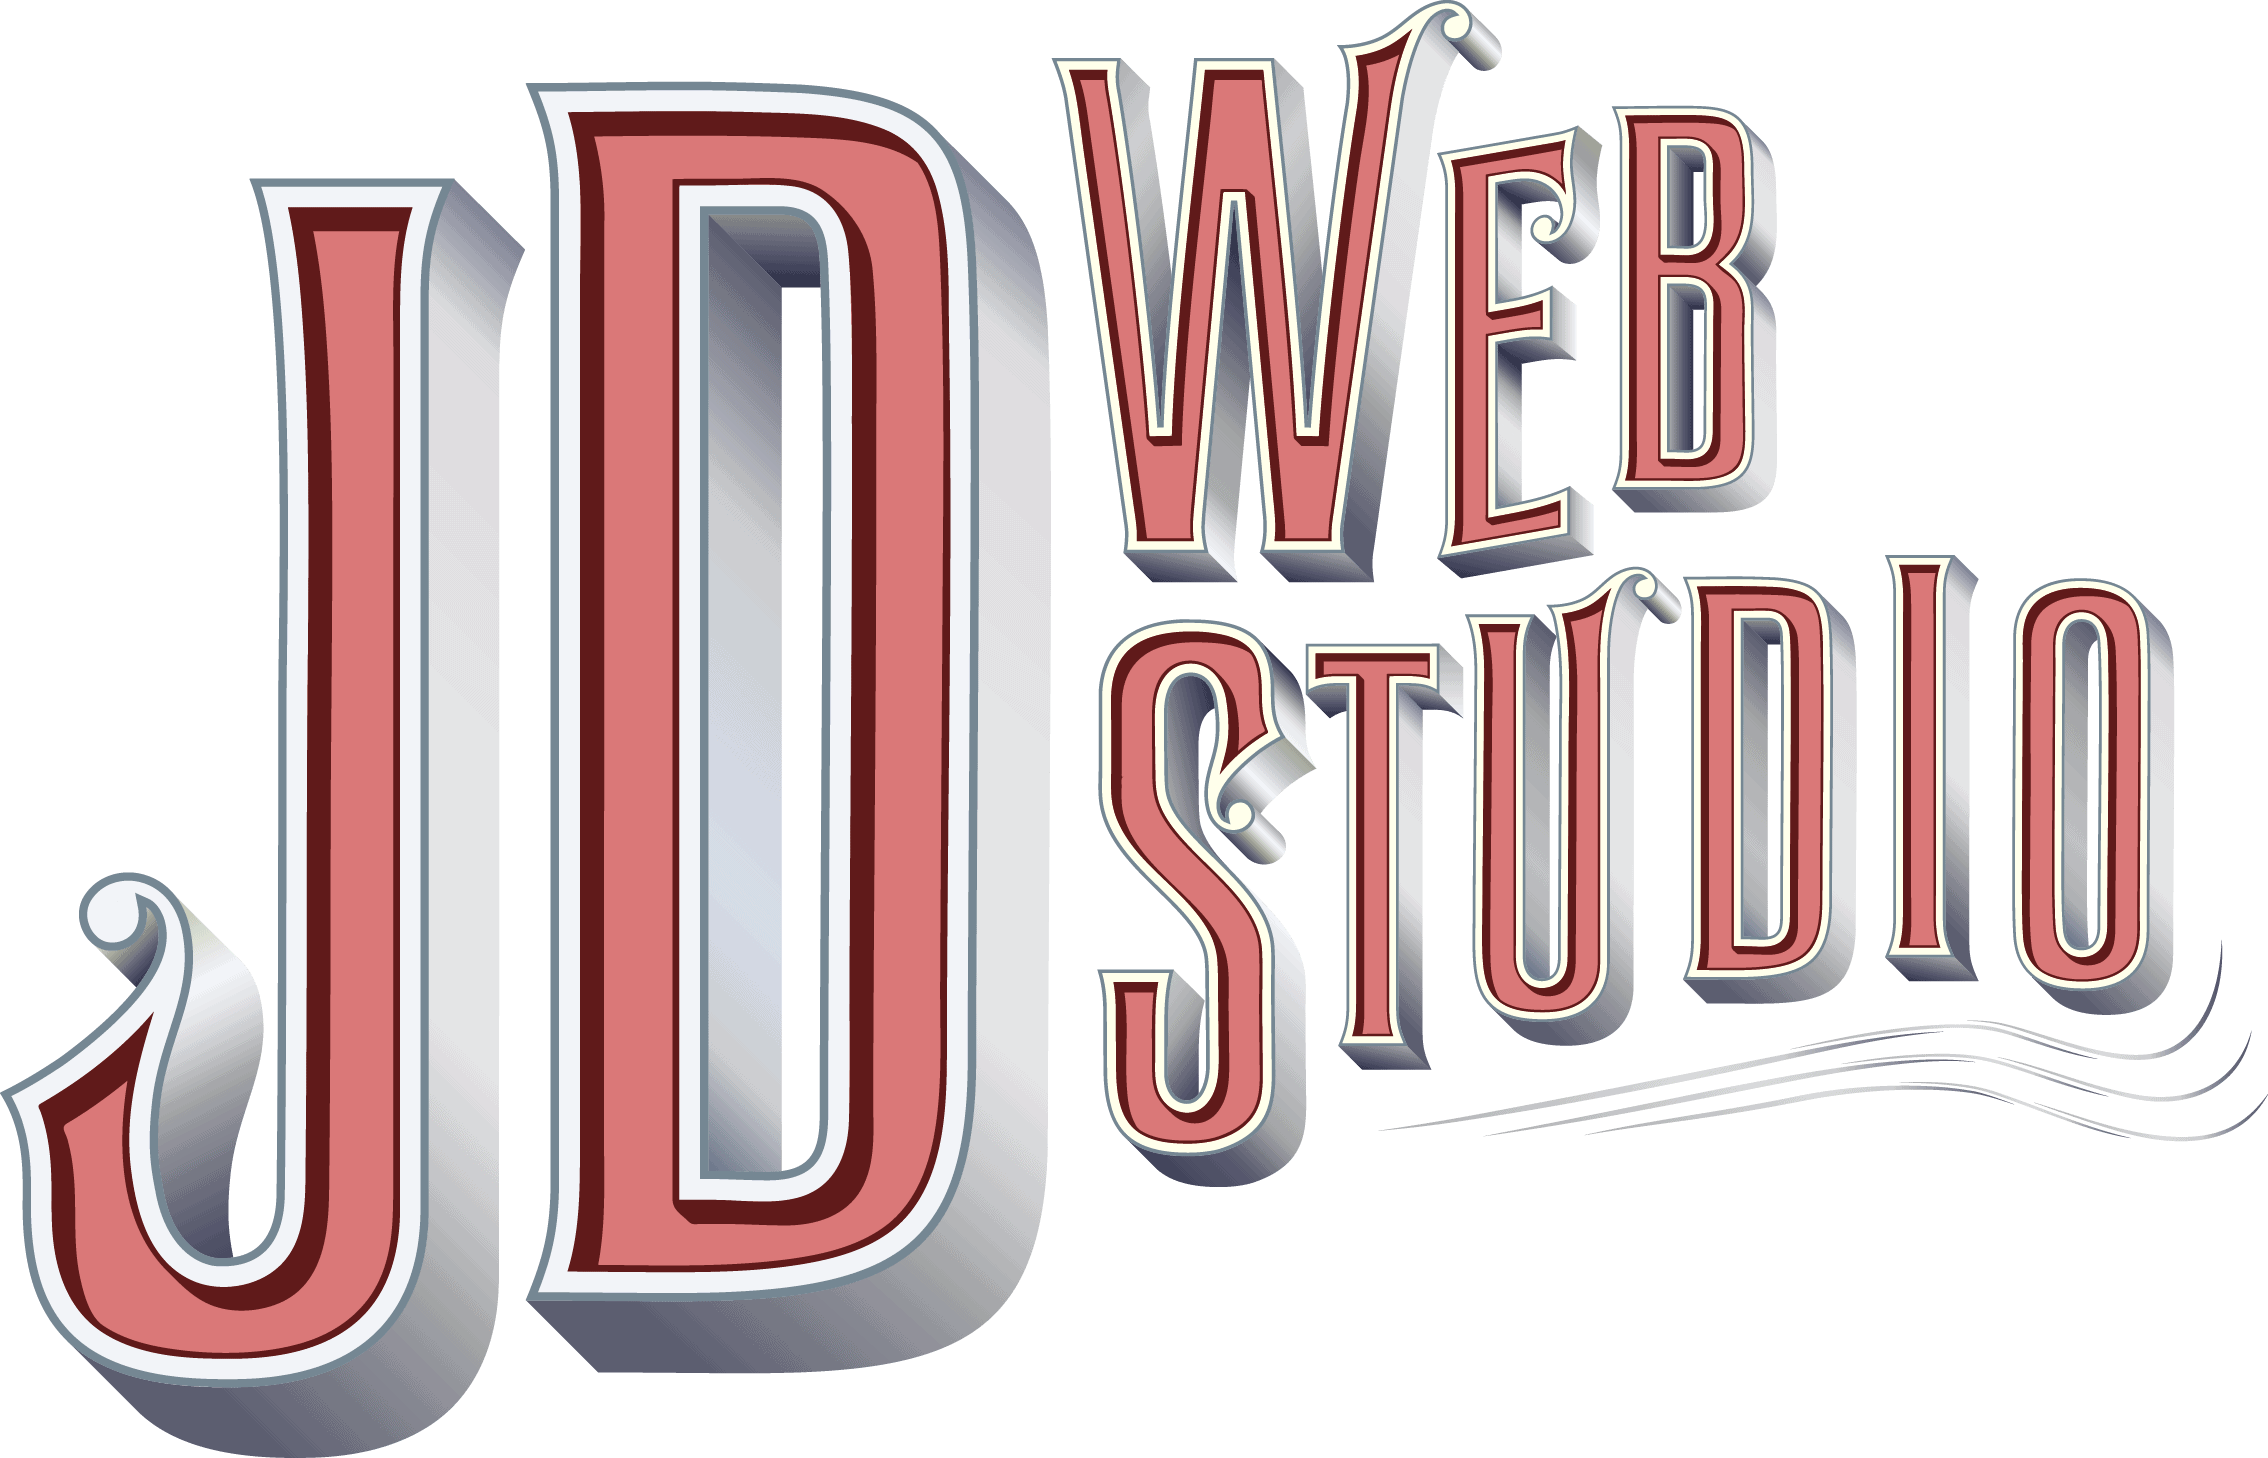 JD Web Studio, LLC - Gulf Coast Web Design & Development - 228-365-1916